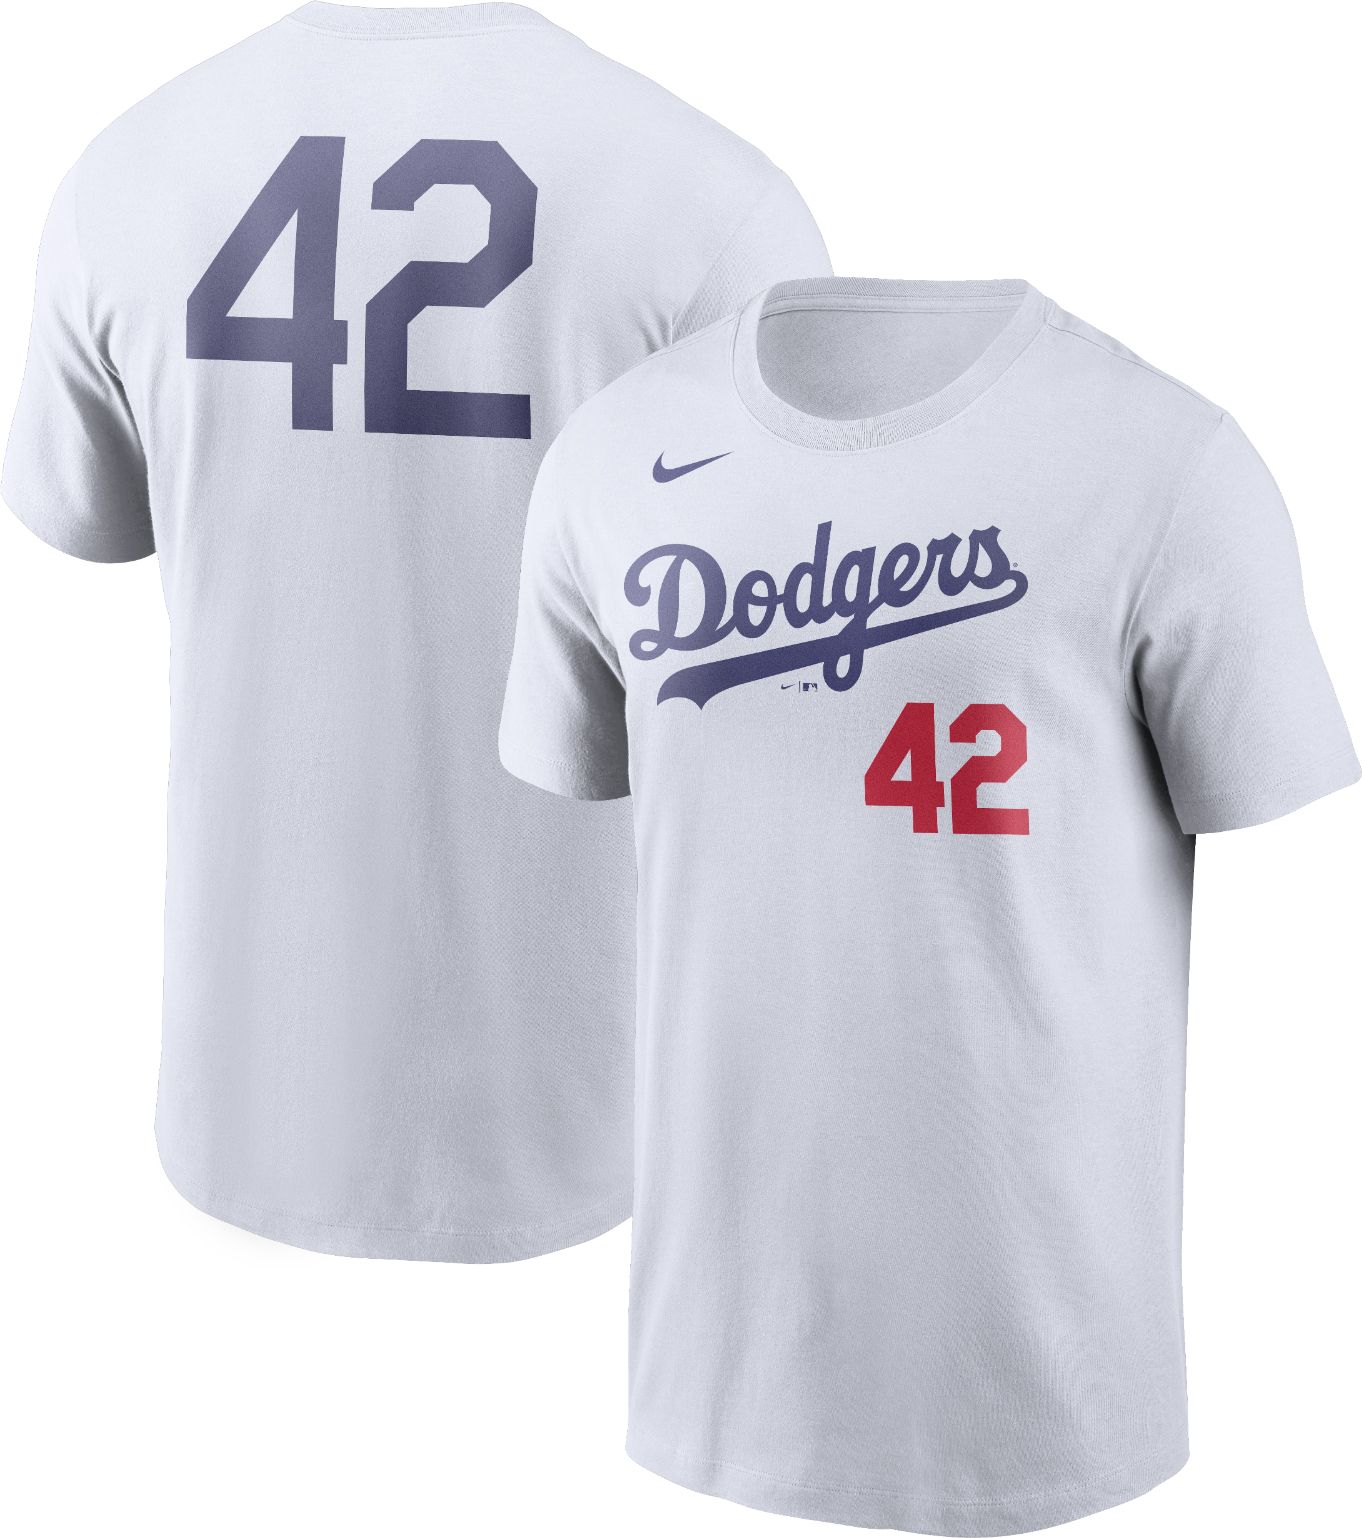 Nike / Men's Los Angeles Dodgers Gray Legend Velocity T-Shirt